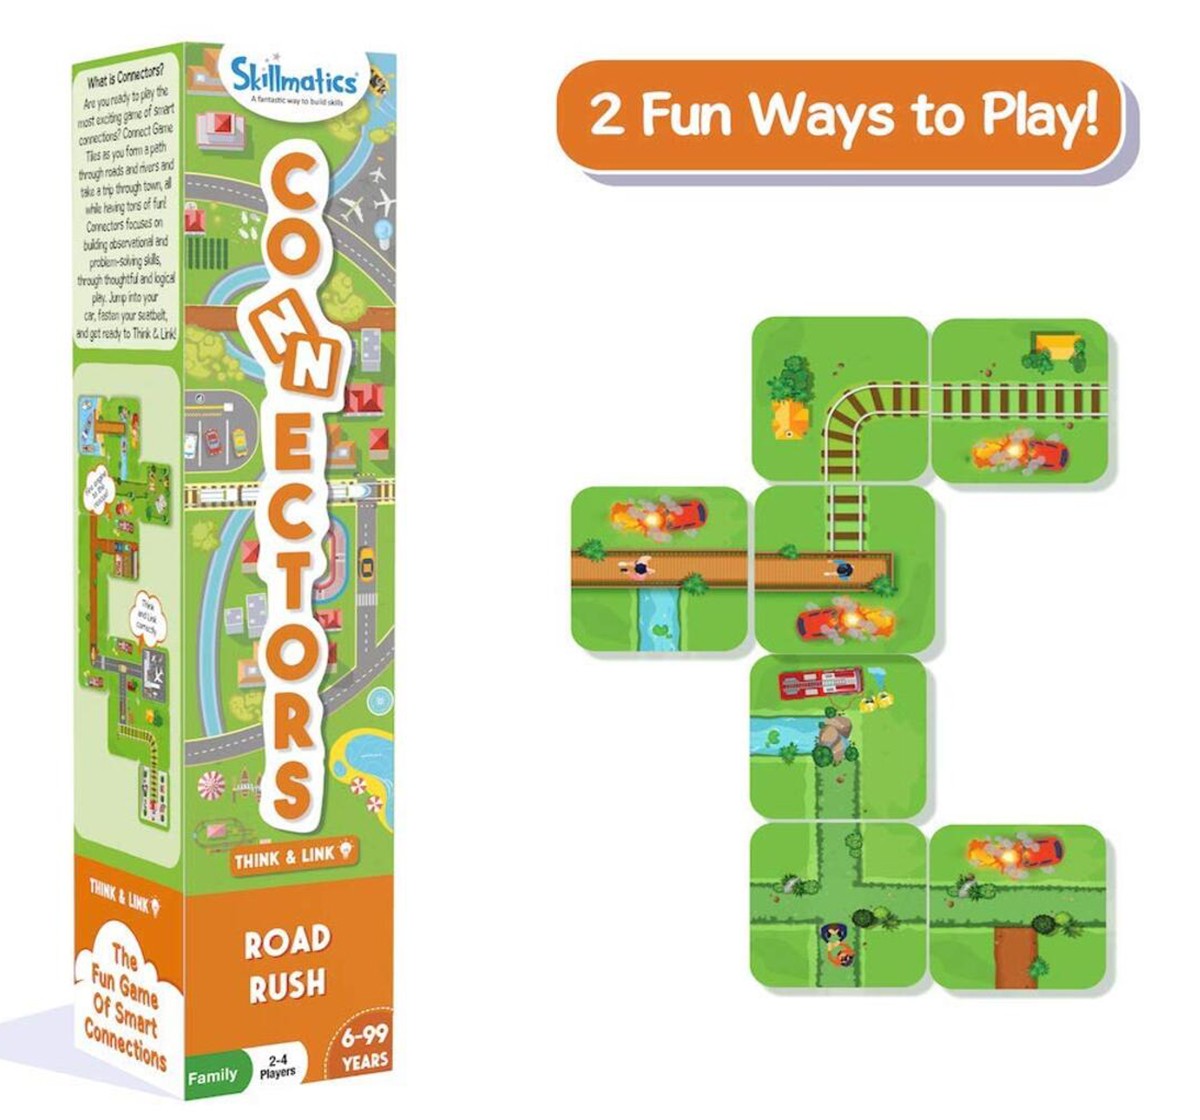 Skillmatics Connectors Road Rush Paper travel game Multicolor 3Y+